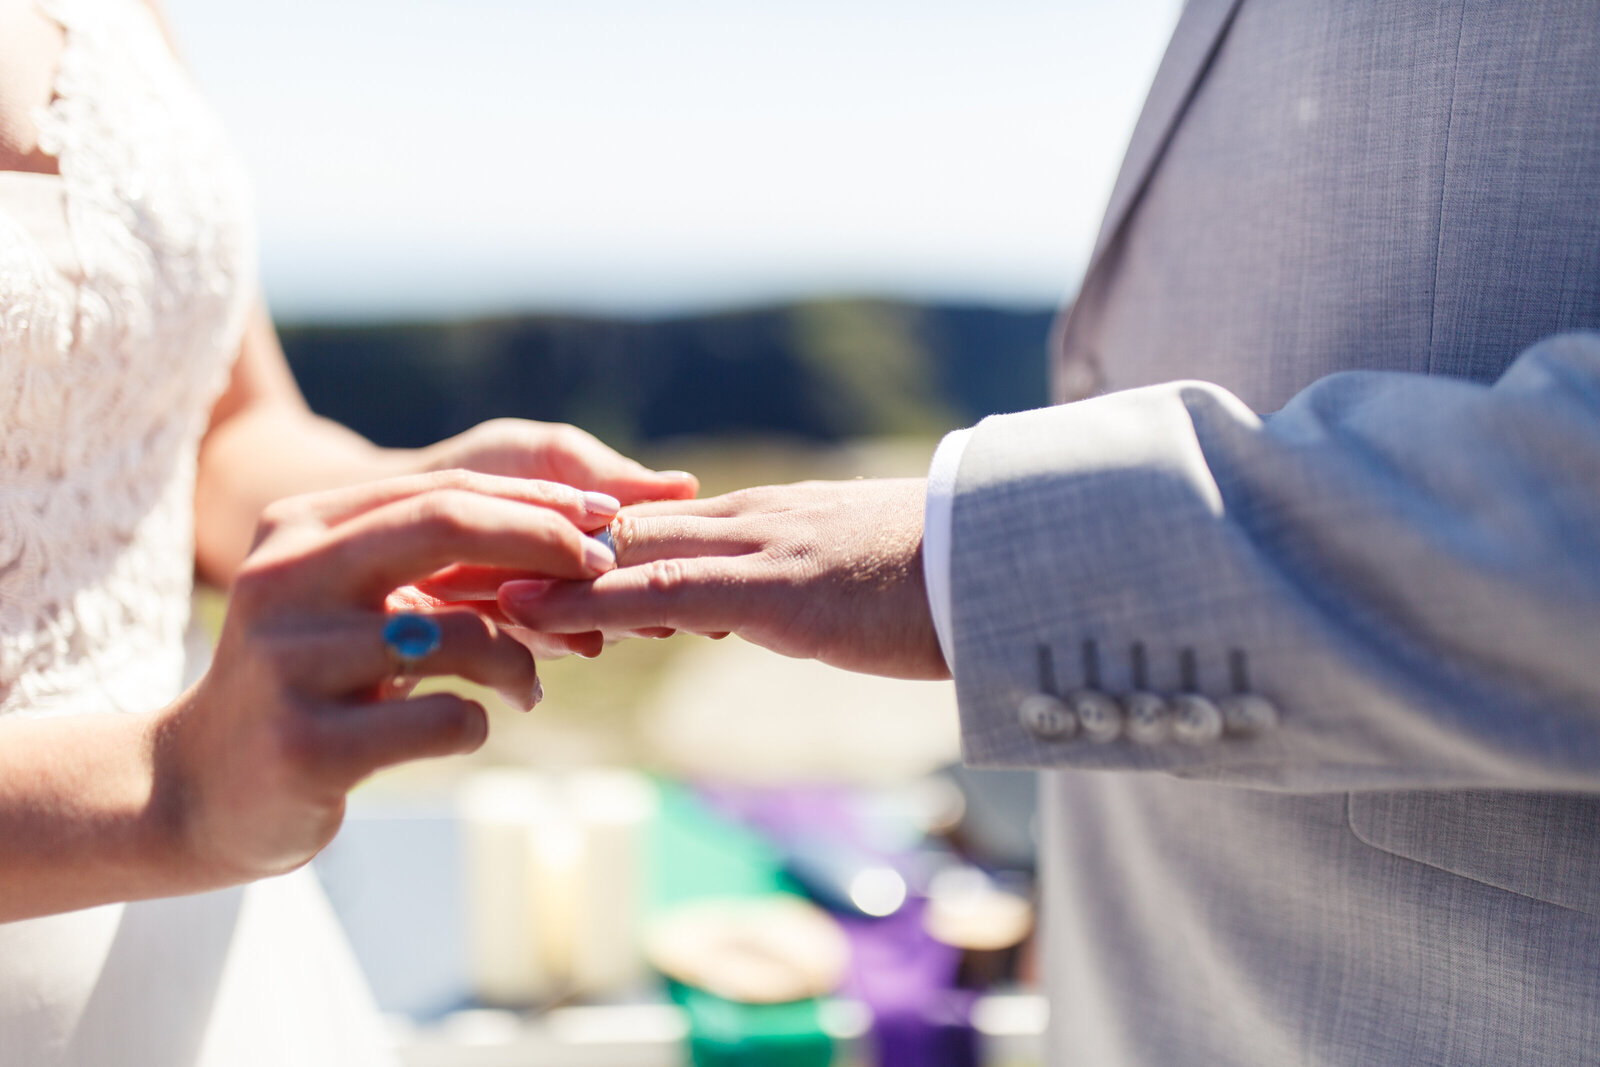 bride putting ring on grooms finger